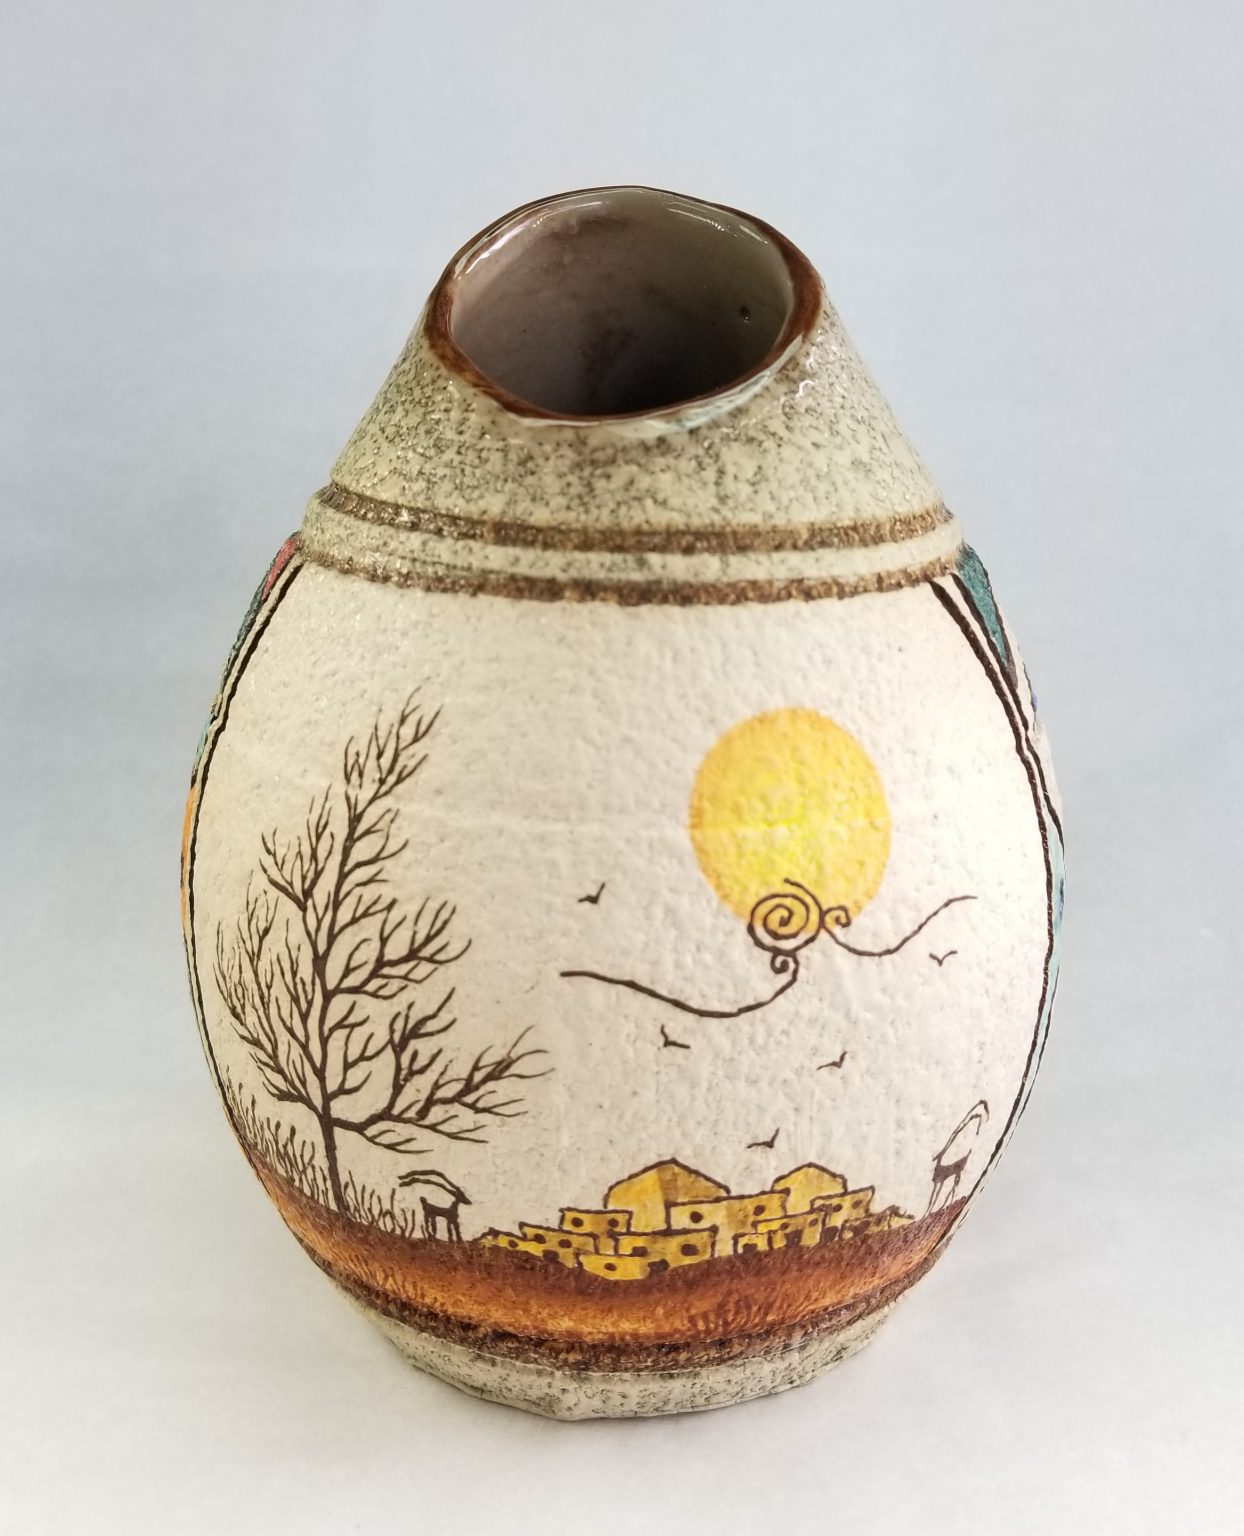 Sialk ceramic oval shaped vase